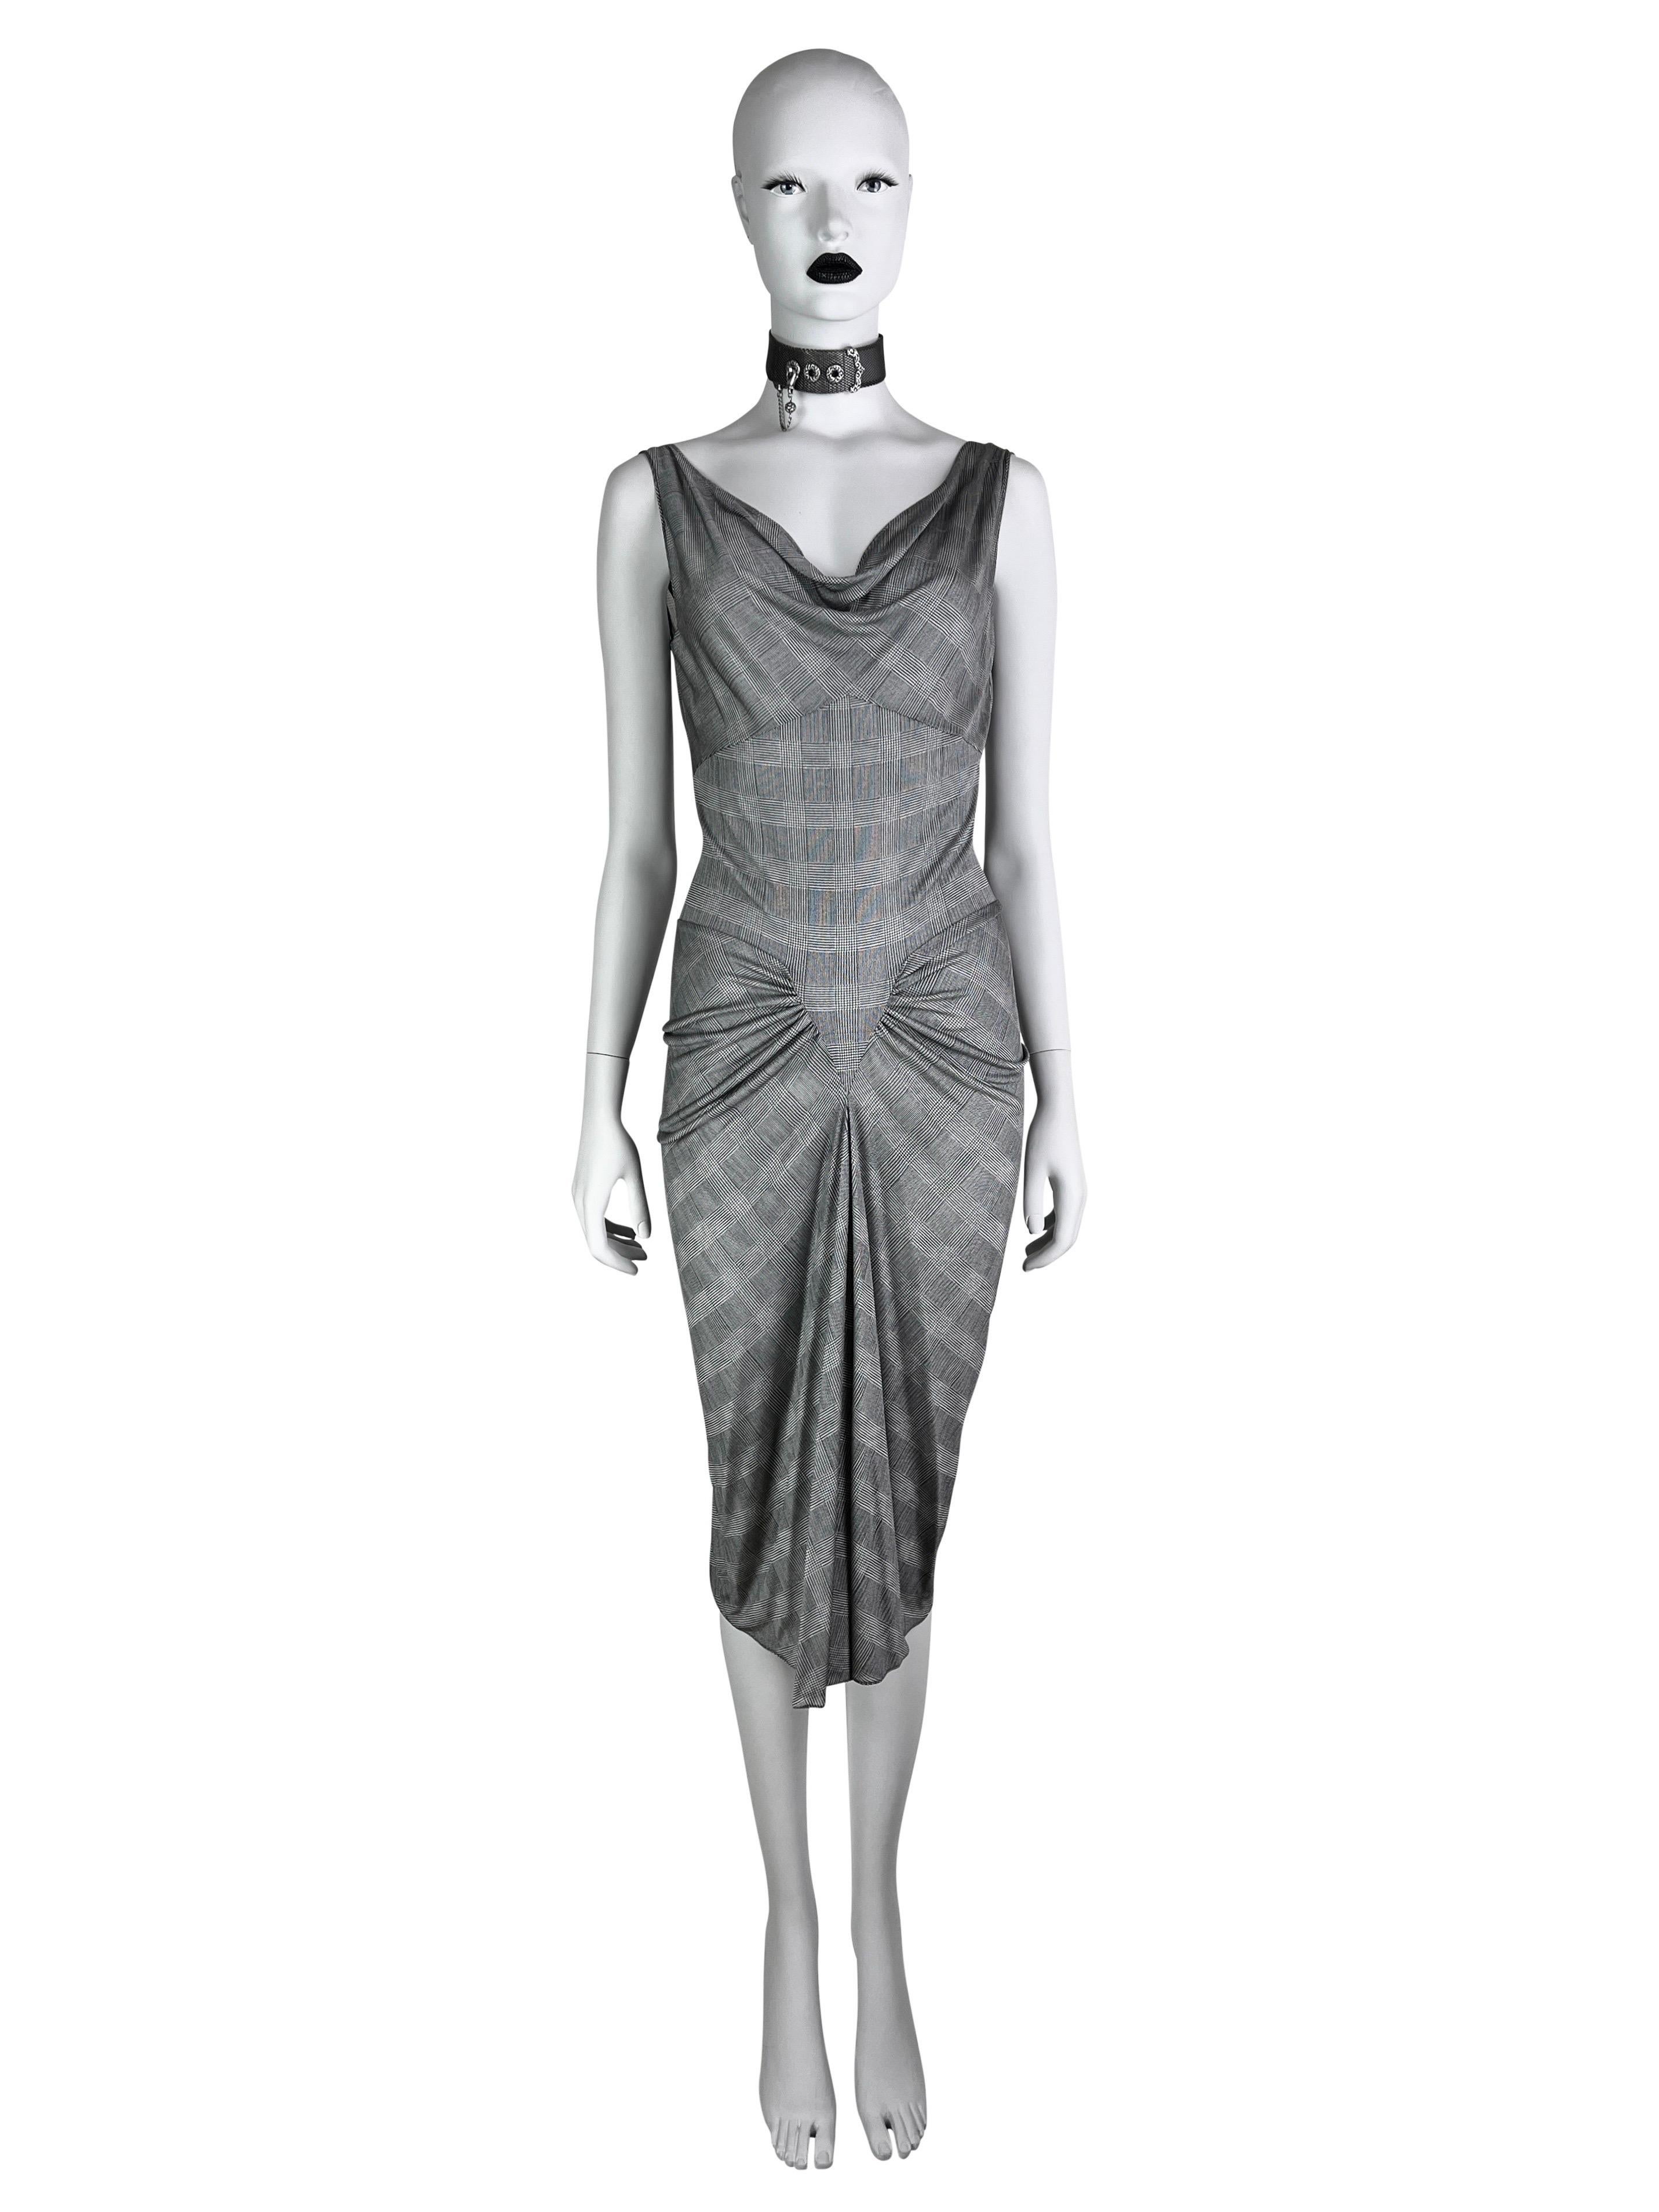 Dior by John Galliano Spring 2000 Plaid Print Silk Draped Grey Jersey Dress For Sale 5